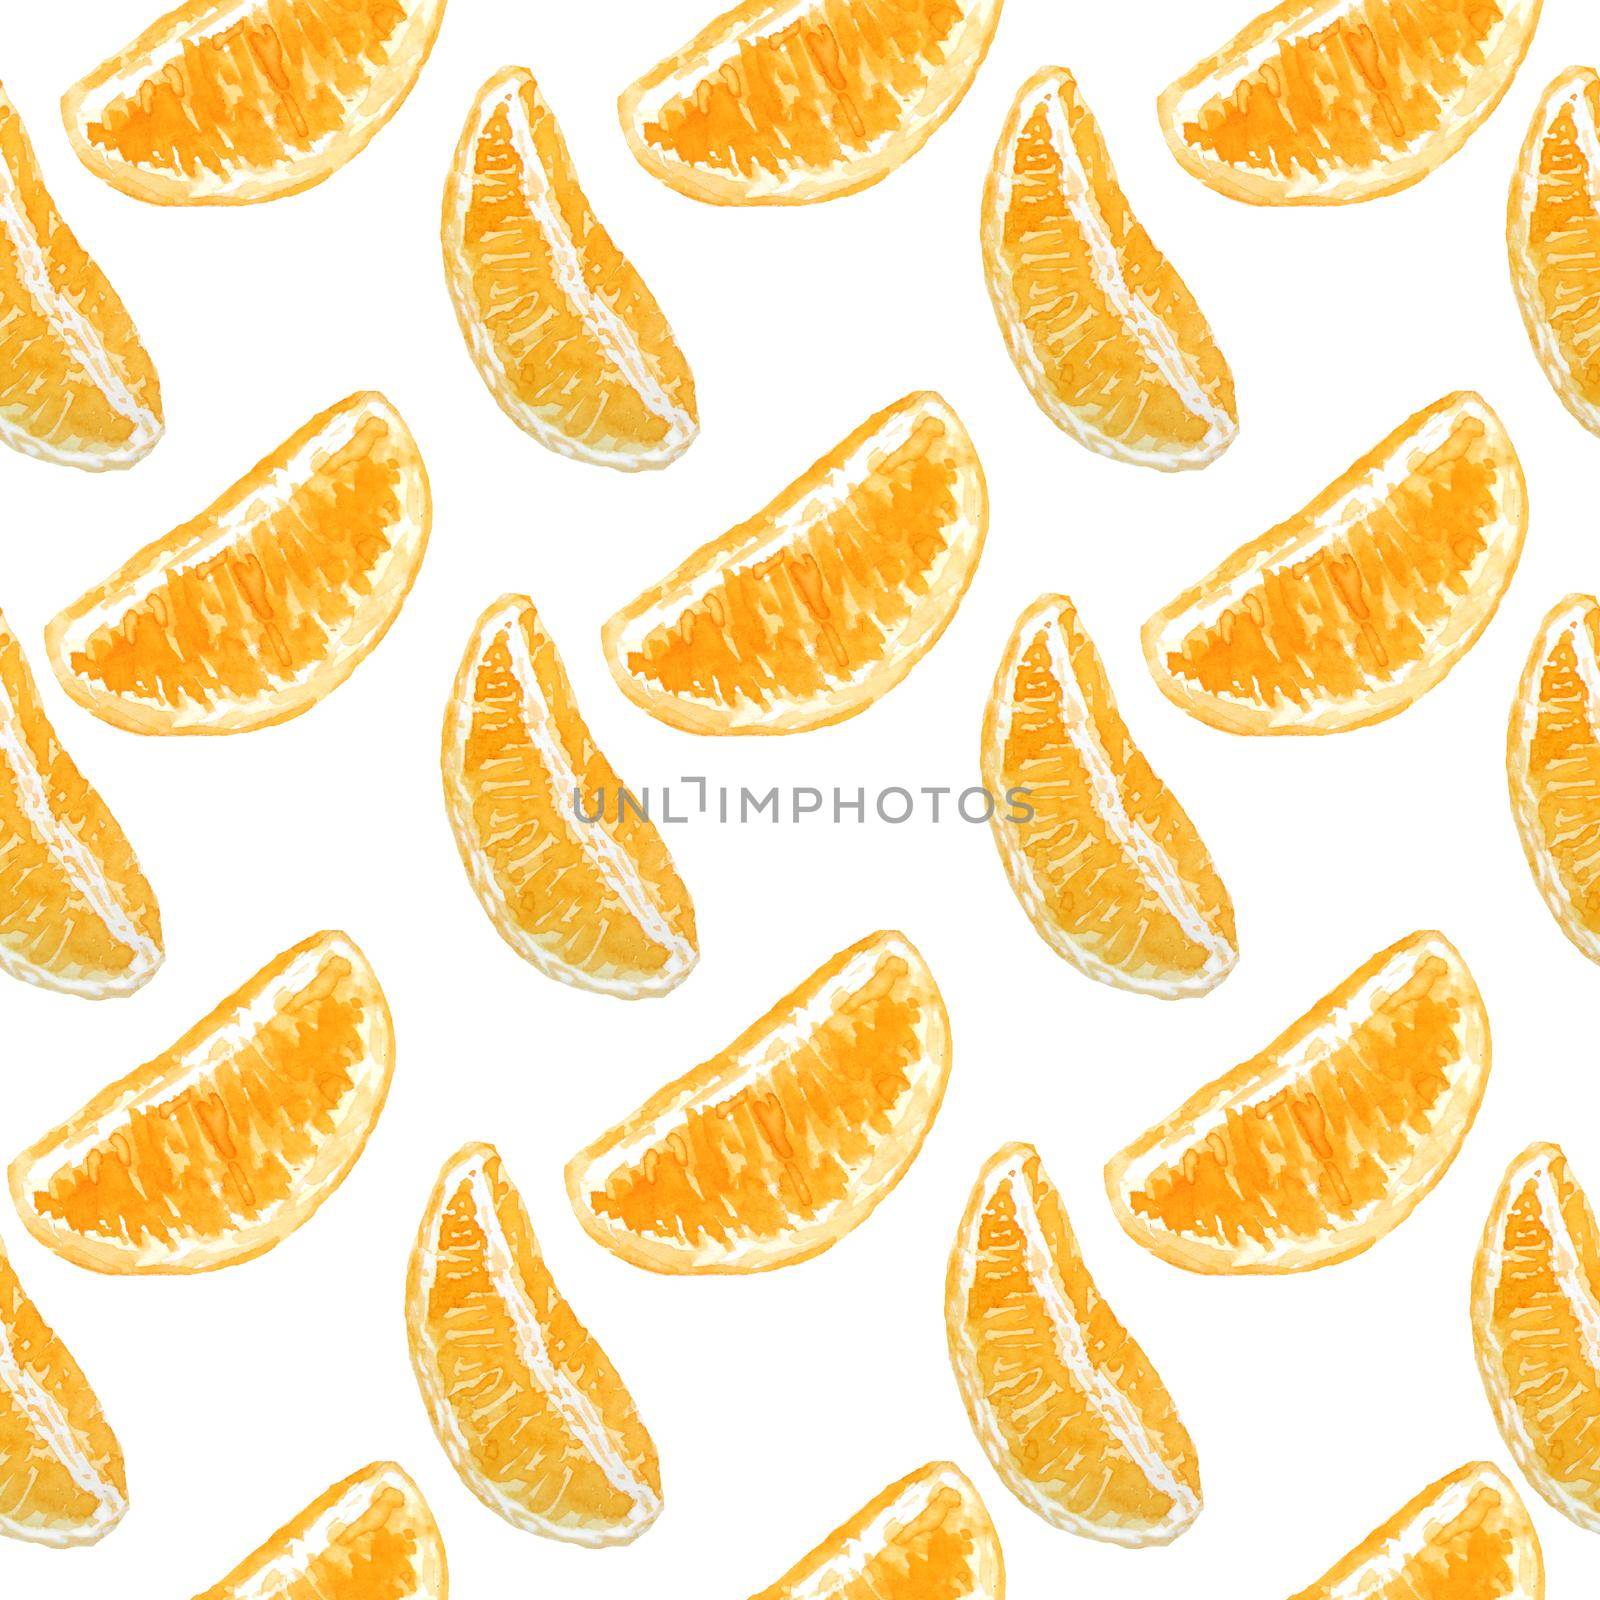 Watercolor hand drawn seamless pattern illustration of bright orange tangerine mandarine citrus fruits pieces minimalist geometric. For food organic vegetarian labels, packaging. Natural trendy design